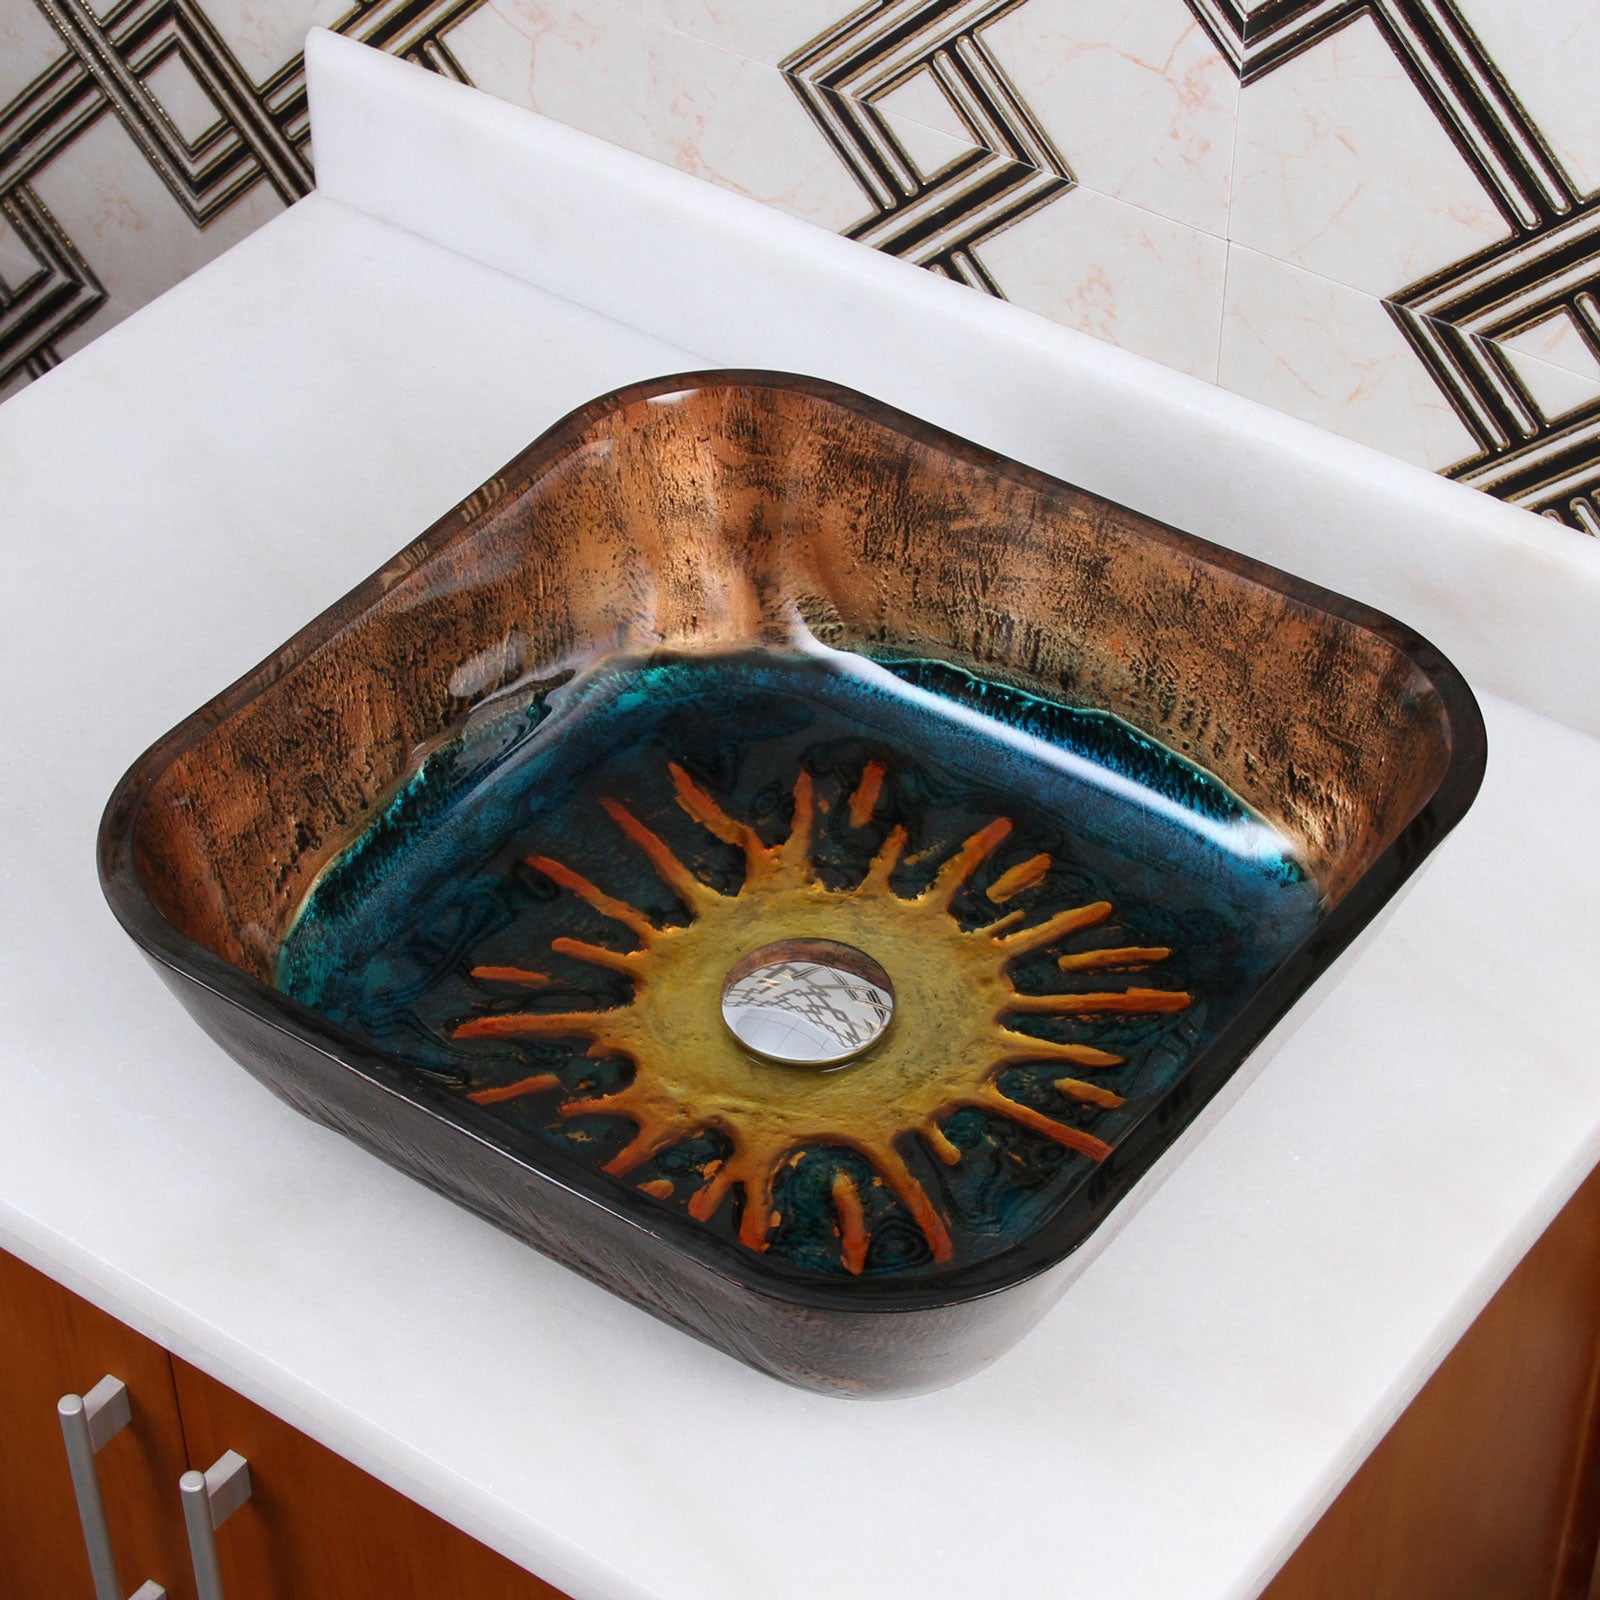 ELITE Square Volcanic Pattern Tempered Glass Bathroom Vessel Sink 1610